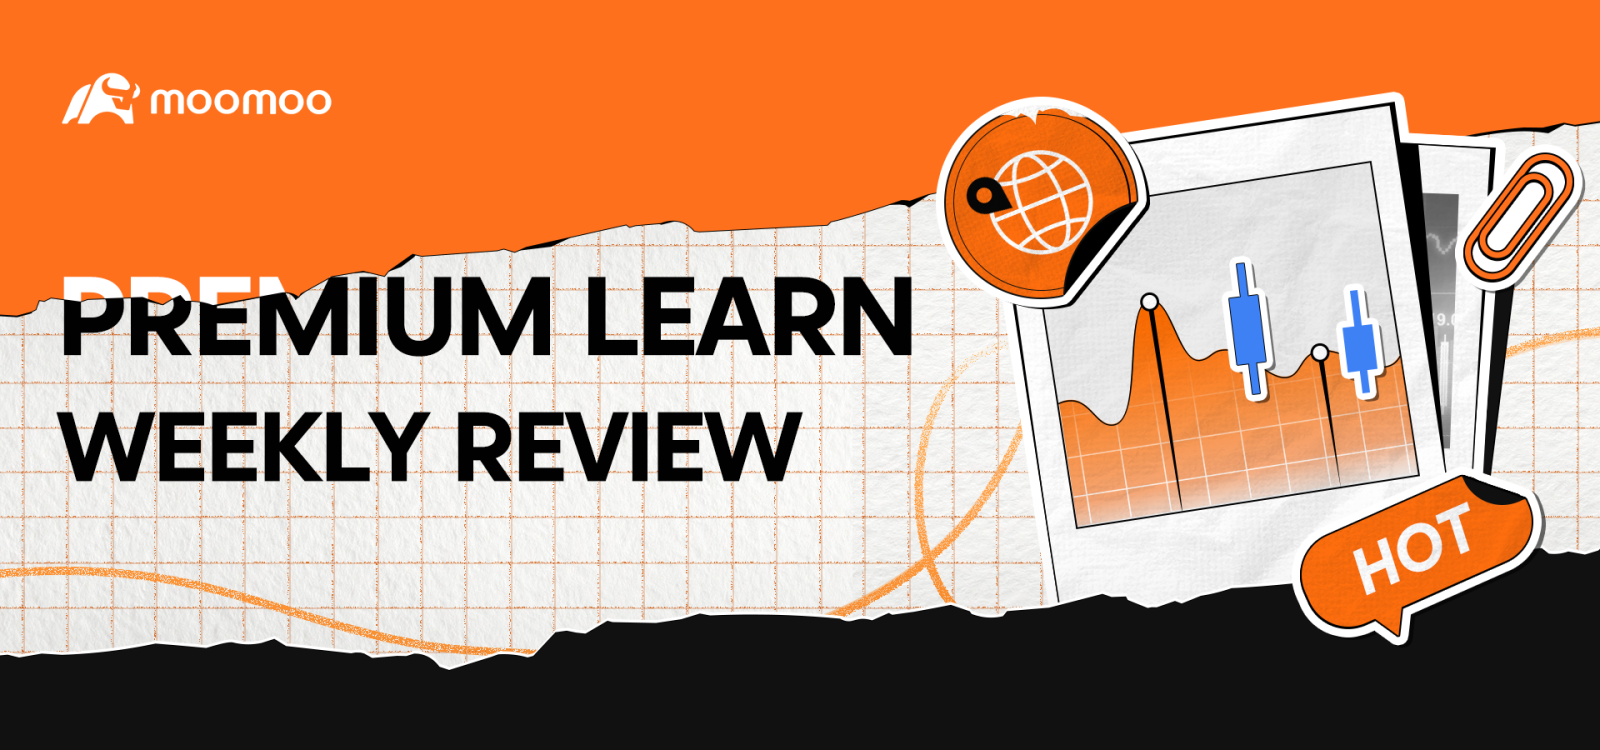 Premium Learn weekly review June 12-June 16